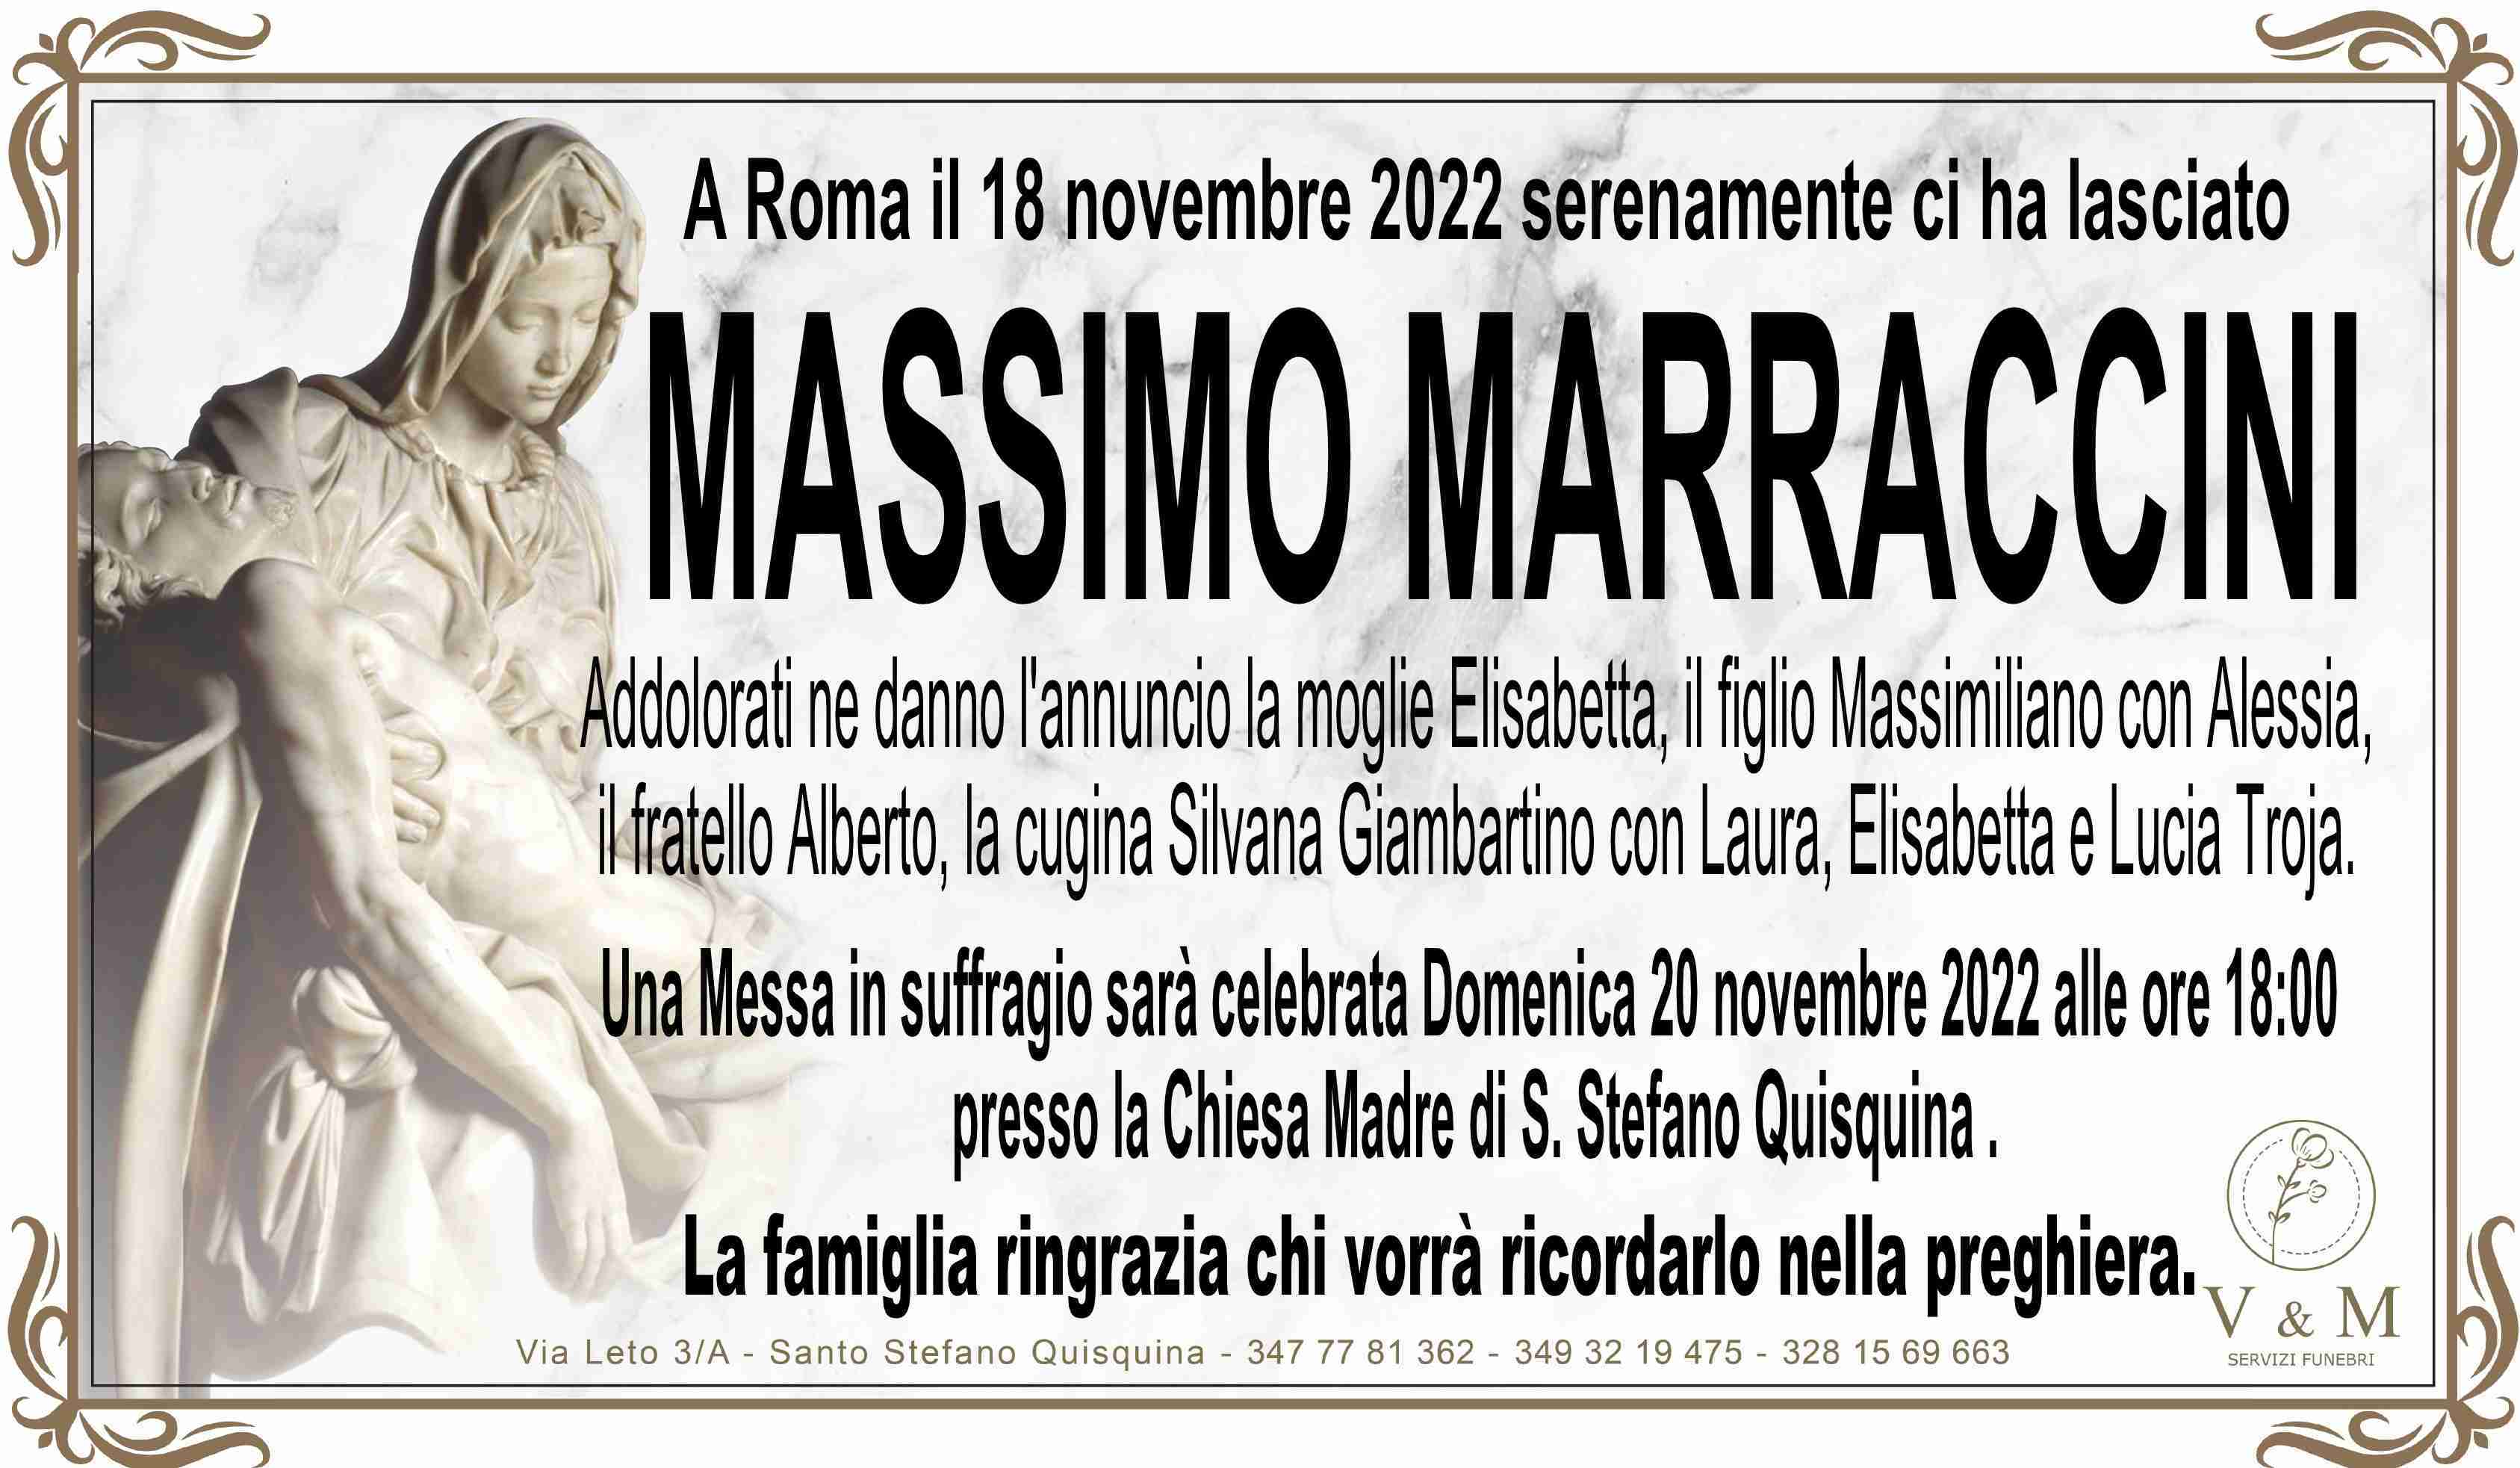 Massimo Marraccini